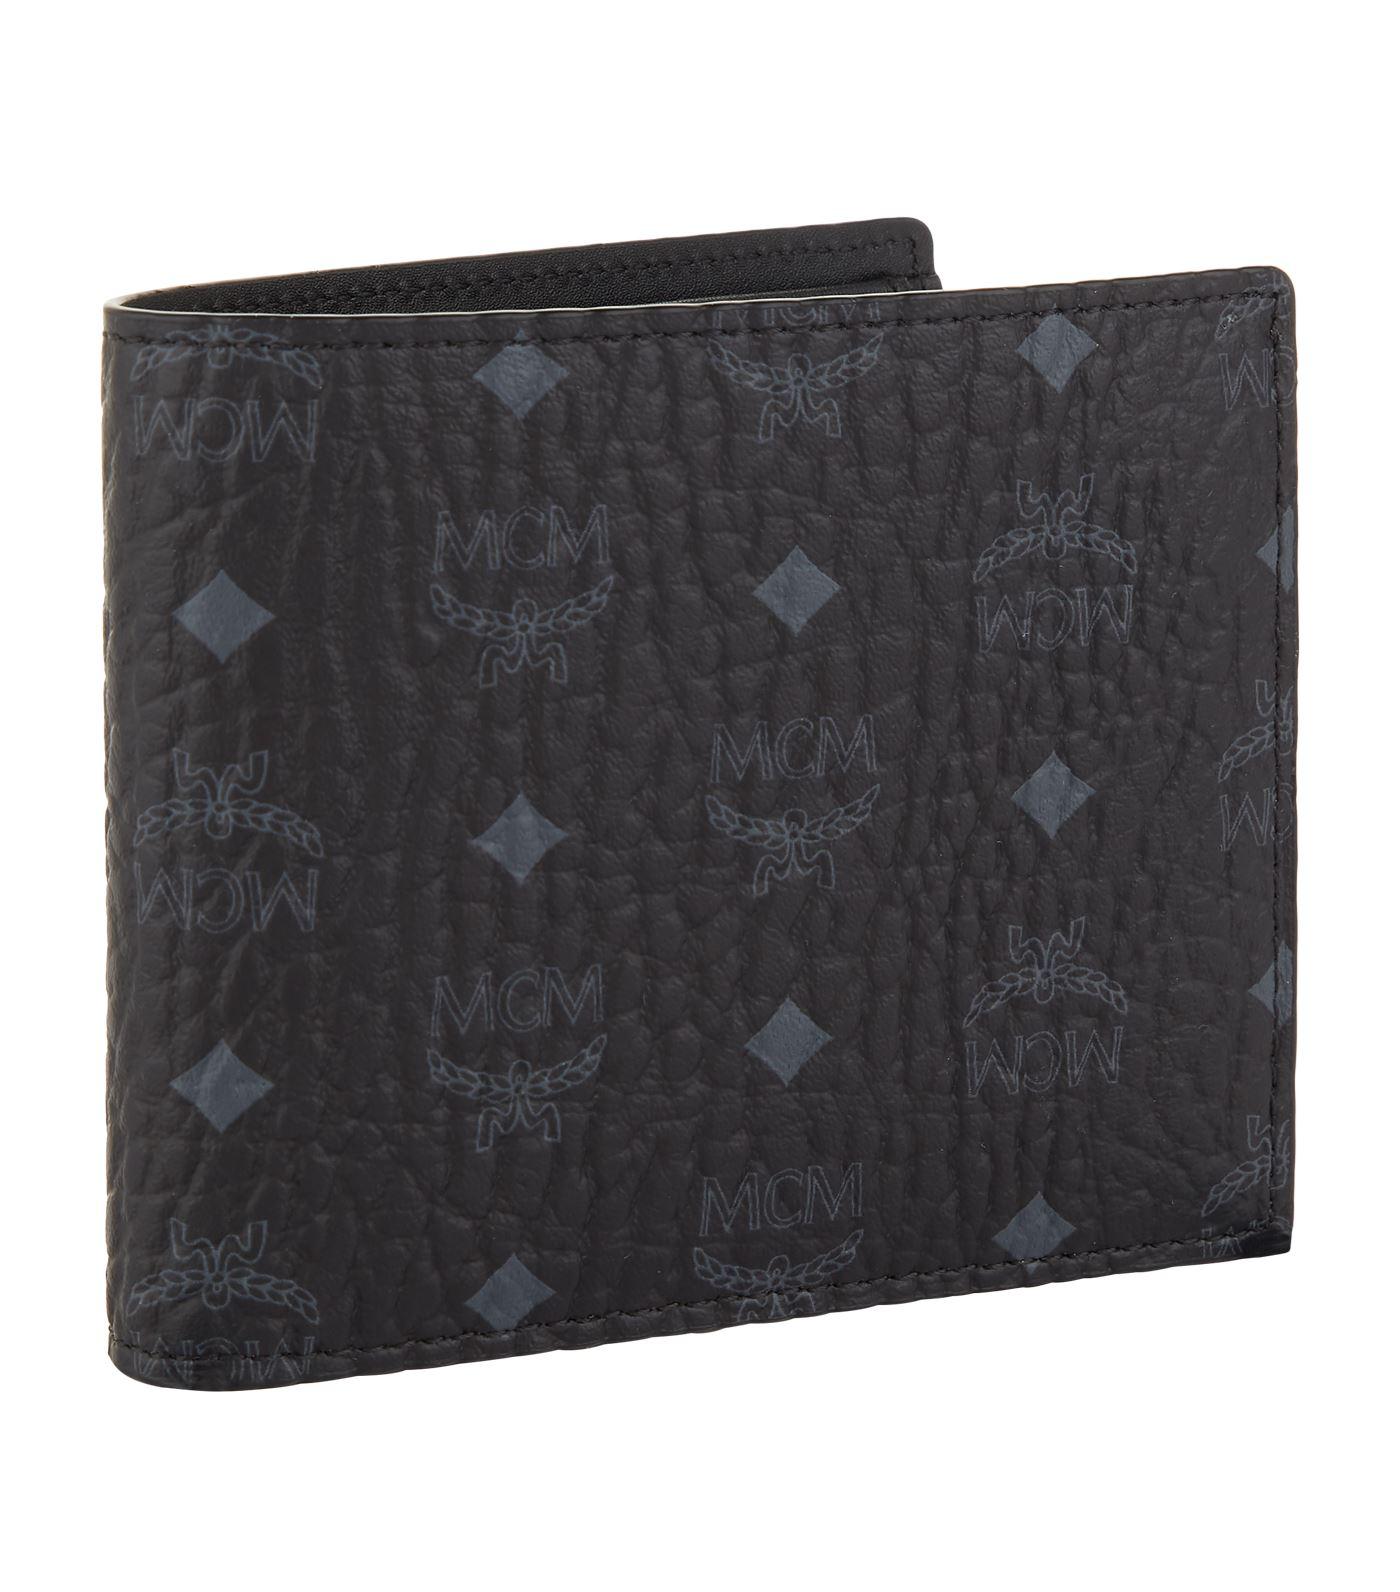 MCM Canvas Small Visetos Bi-fold Wallet in bk (Black) for Men - Lyst